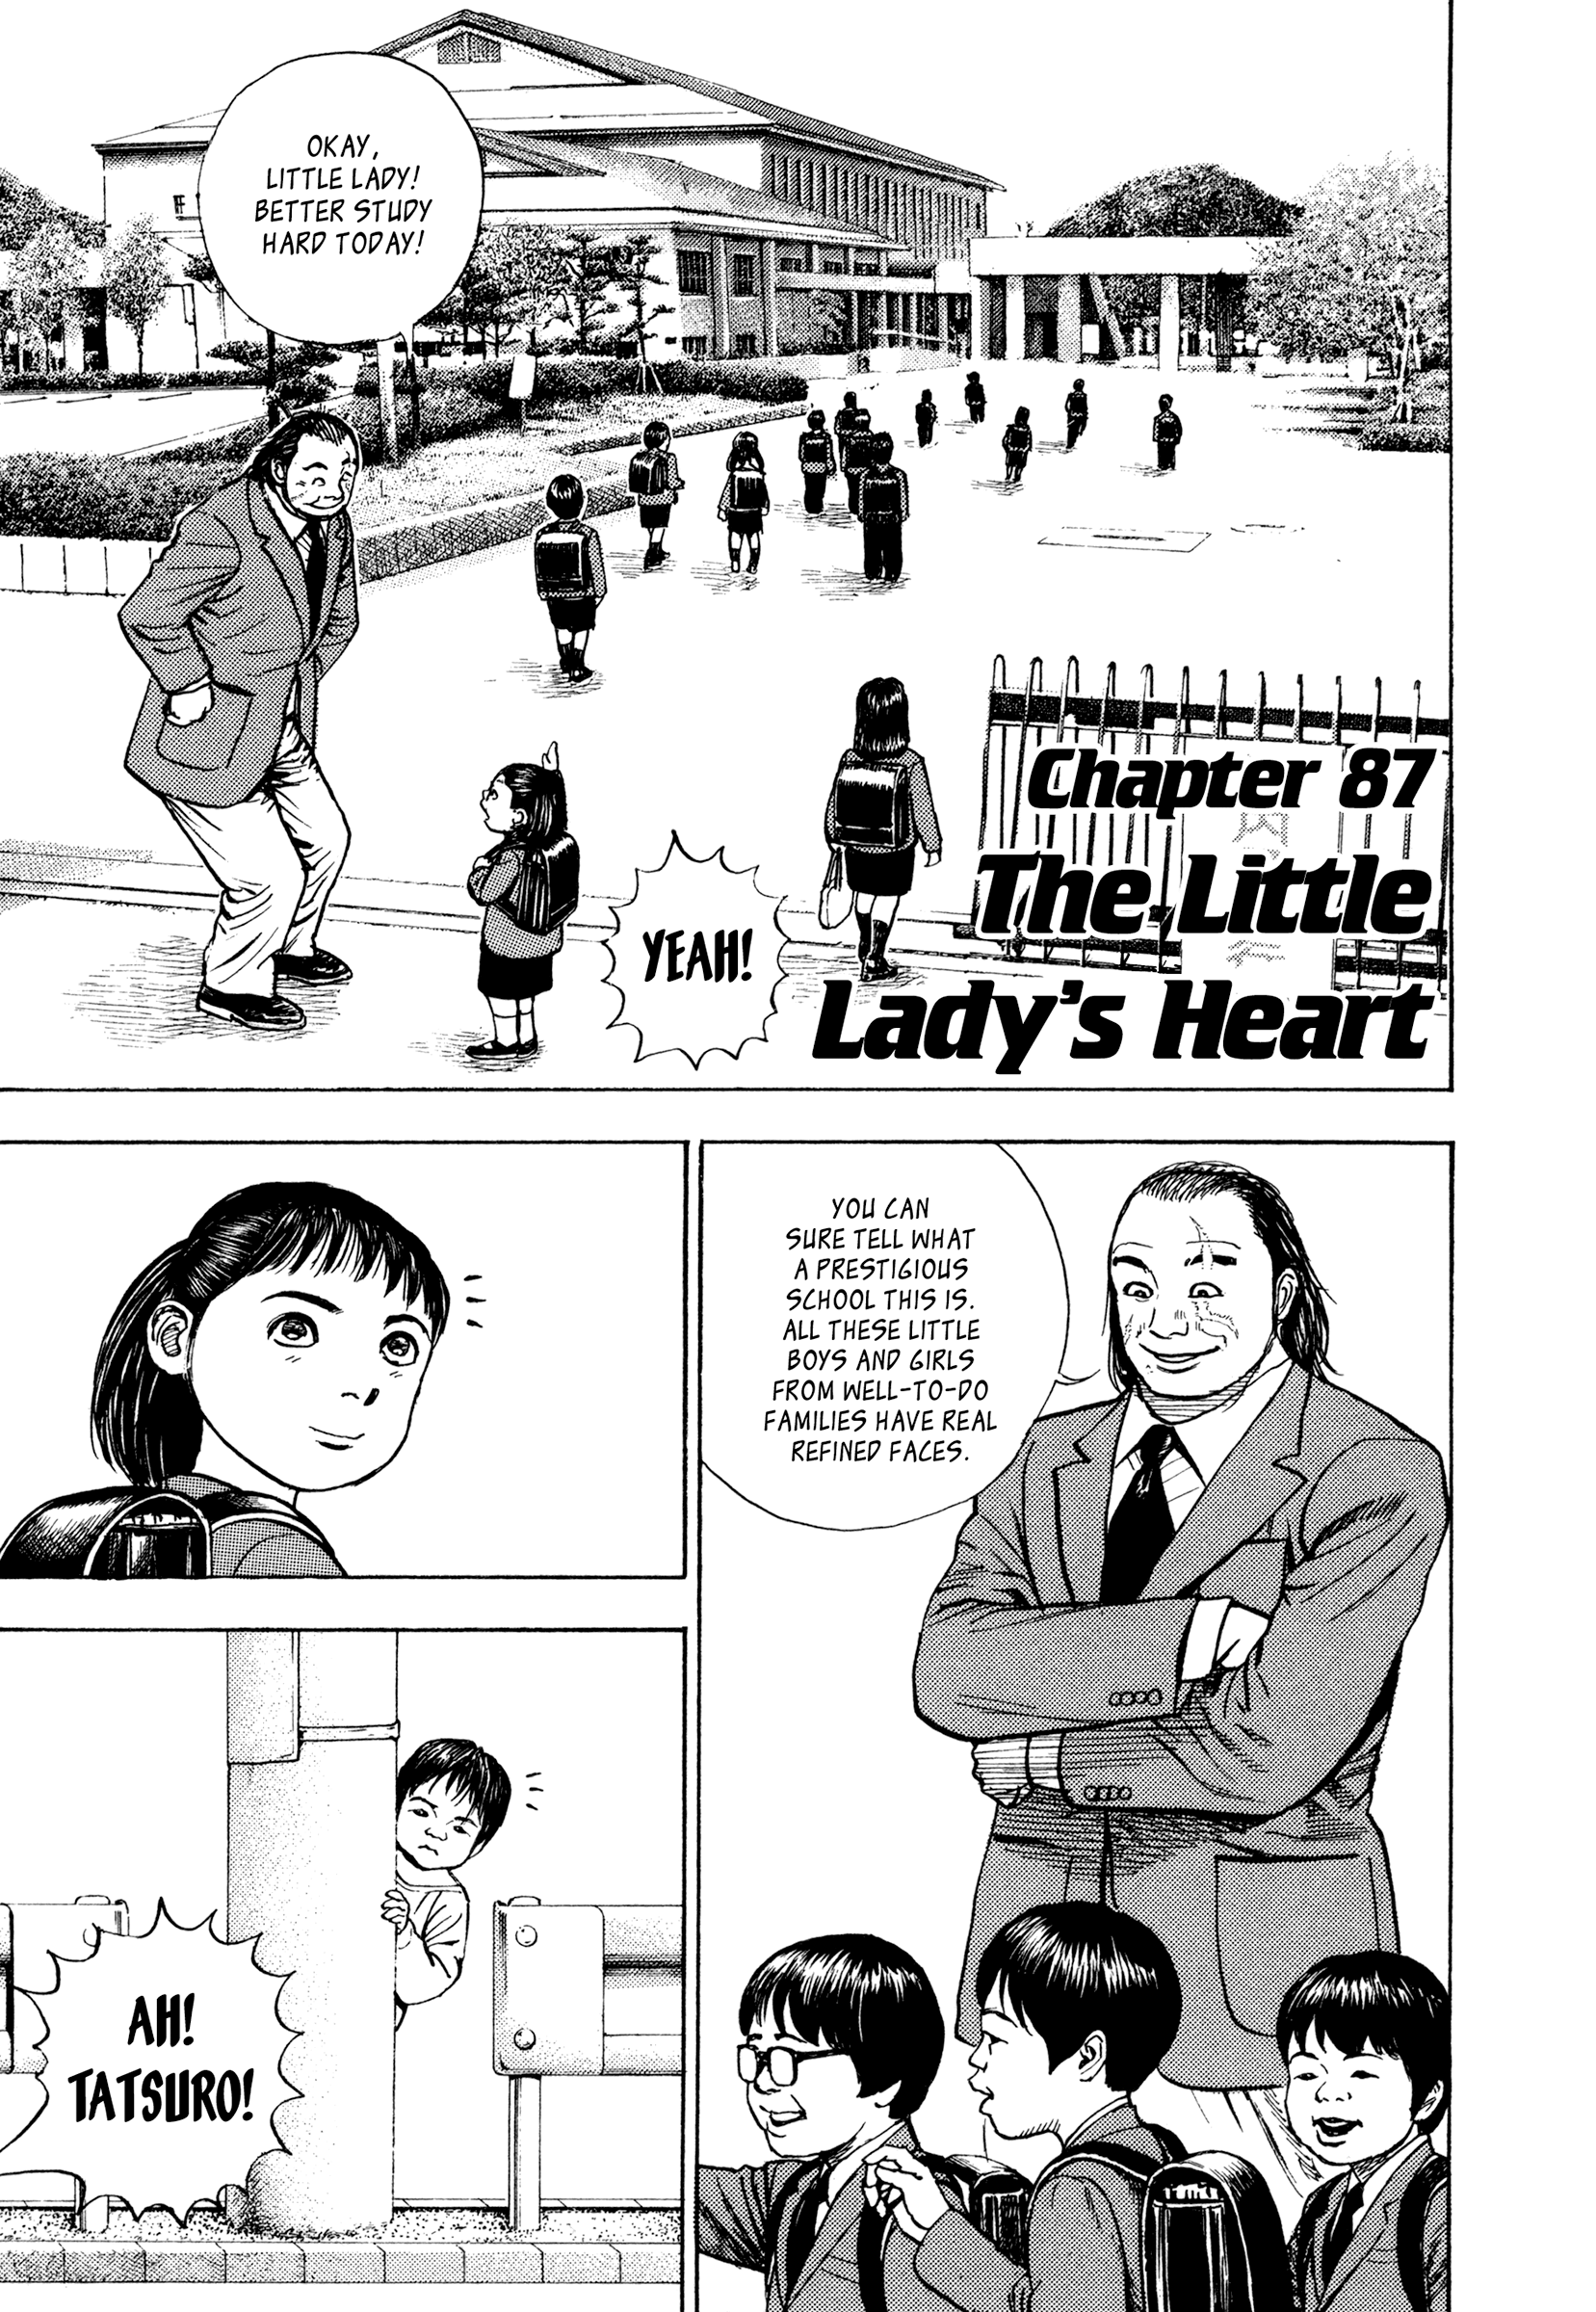 Kizu Darake No Jinsei Vol.12 Chapter 87: The Little Lady's Heart - Picture 1